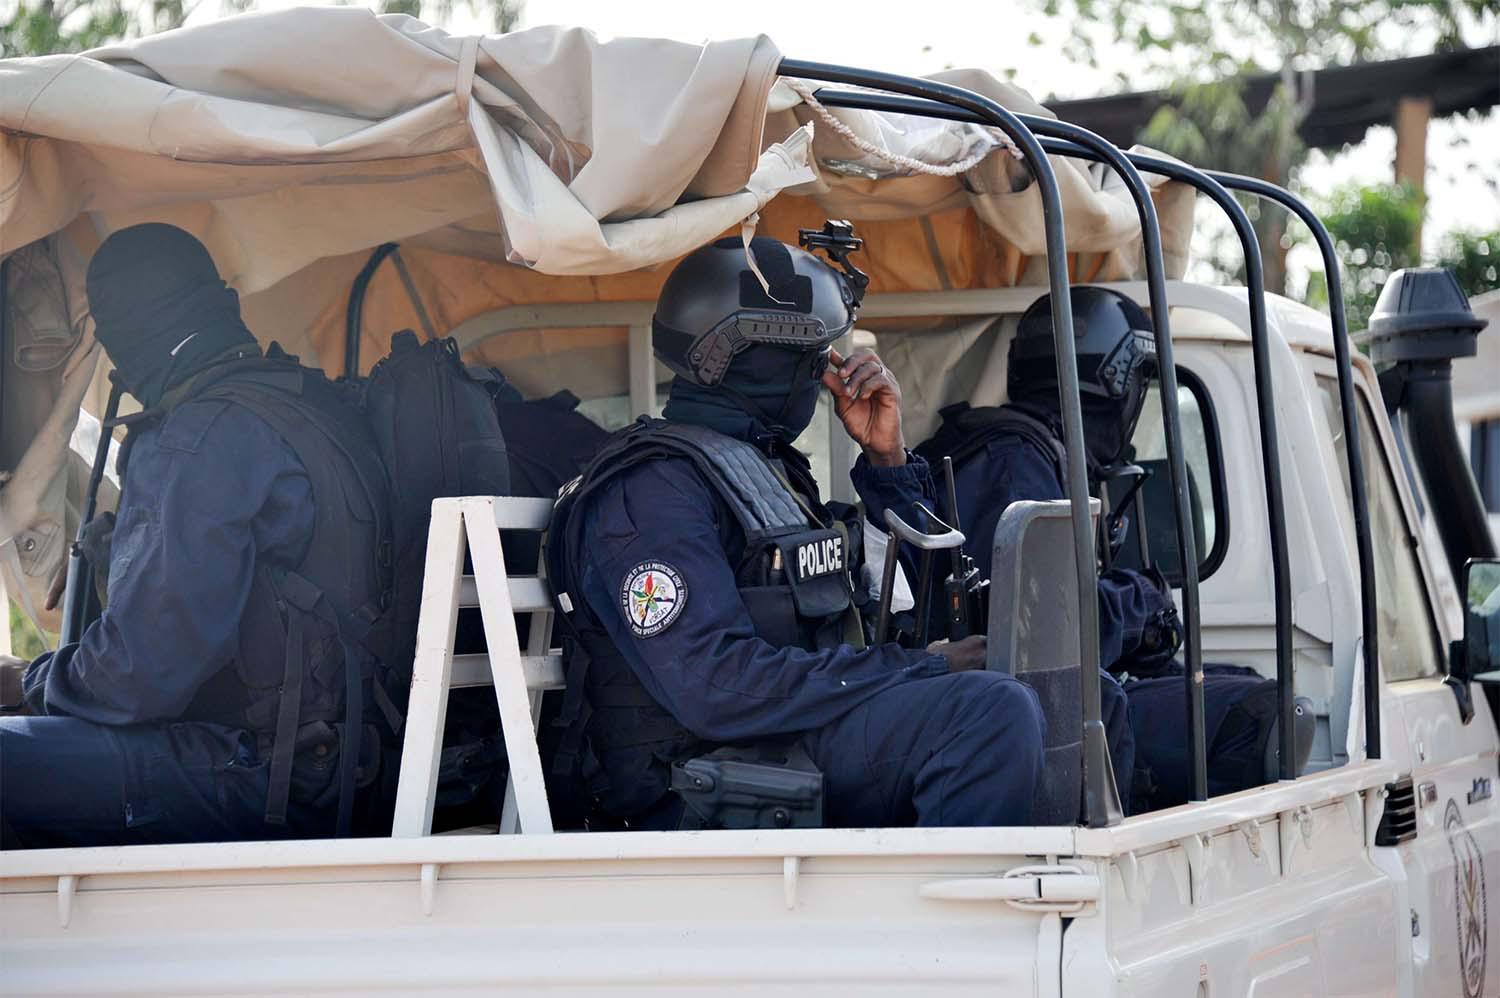 Mali police